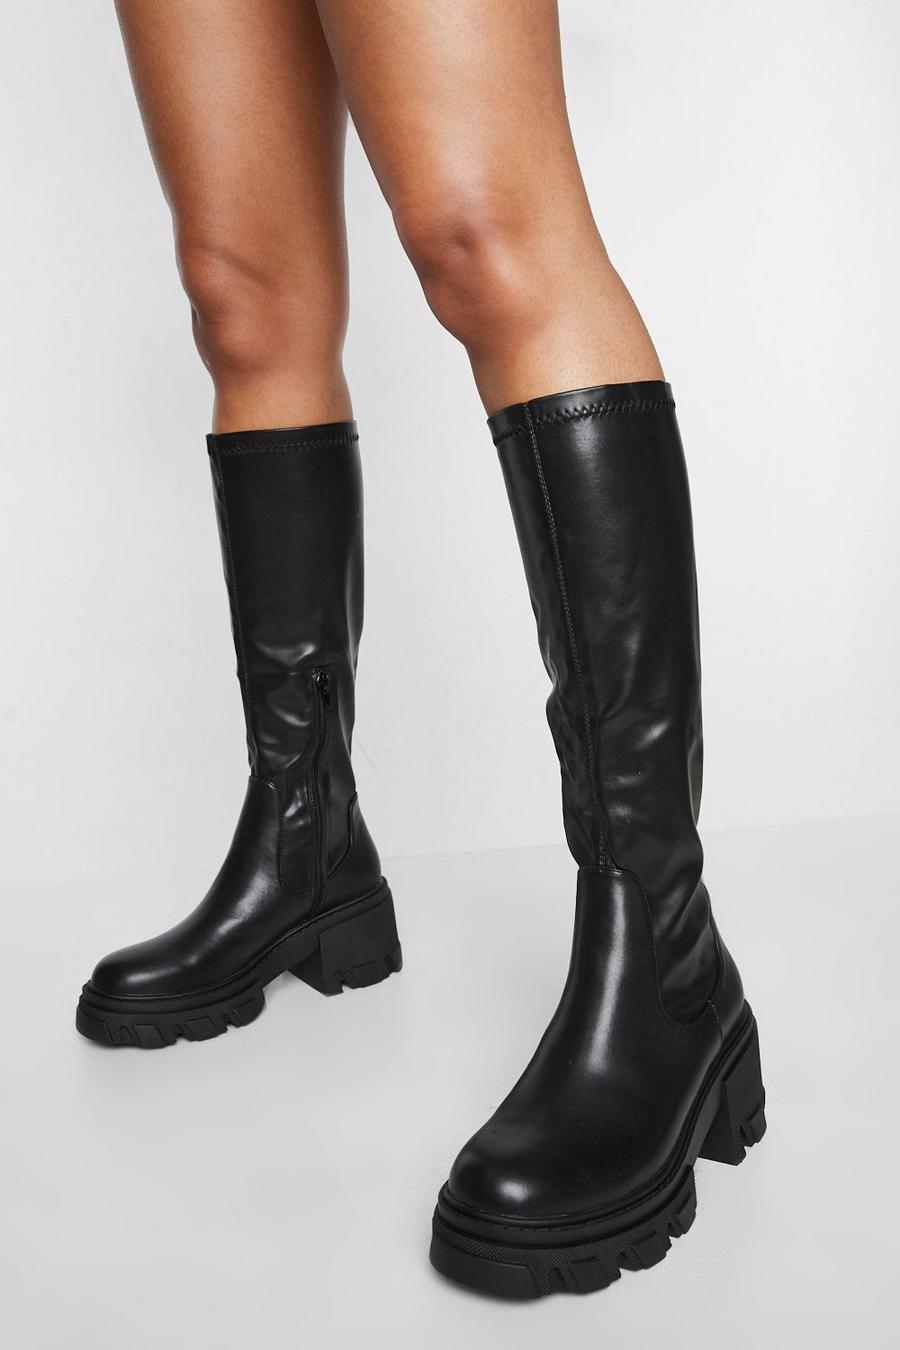 Black Calf High Chunky Heeled Boots